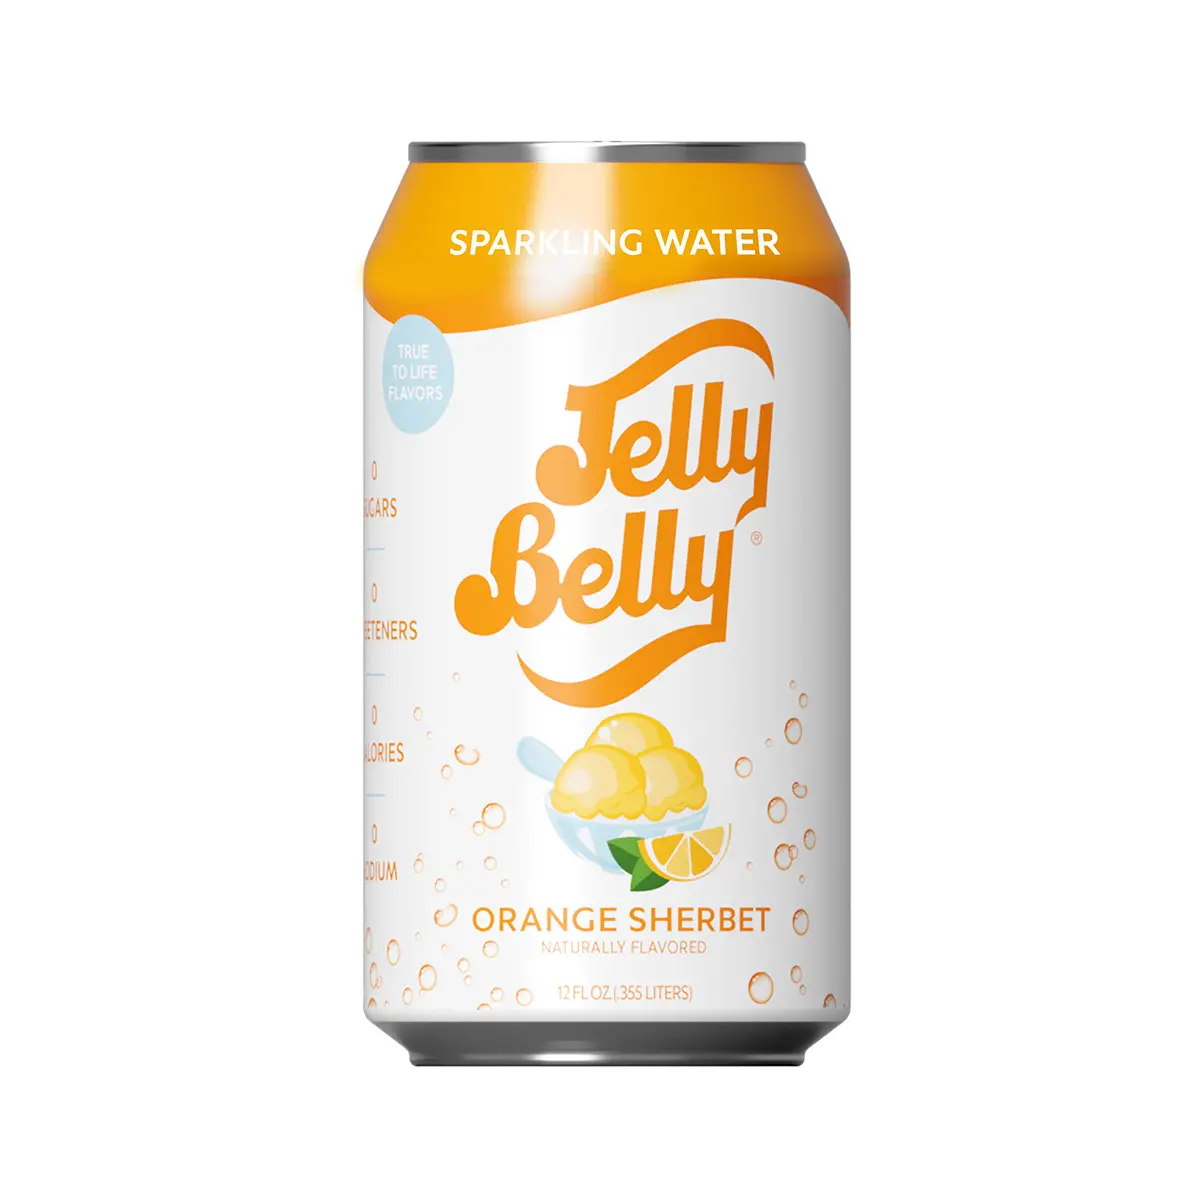 orange sherbet jelly belly sparkling water